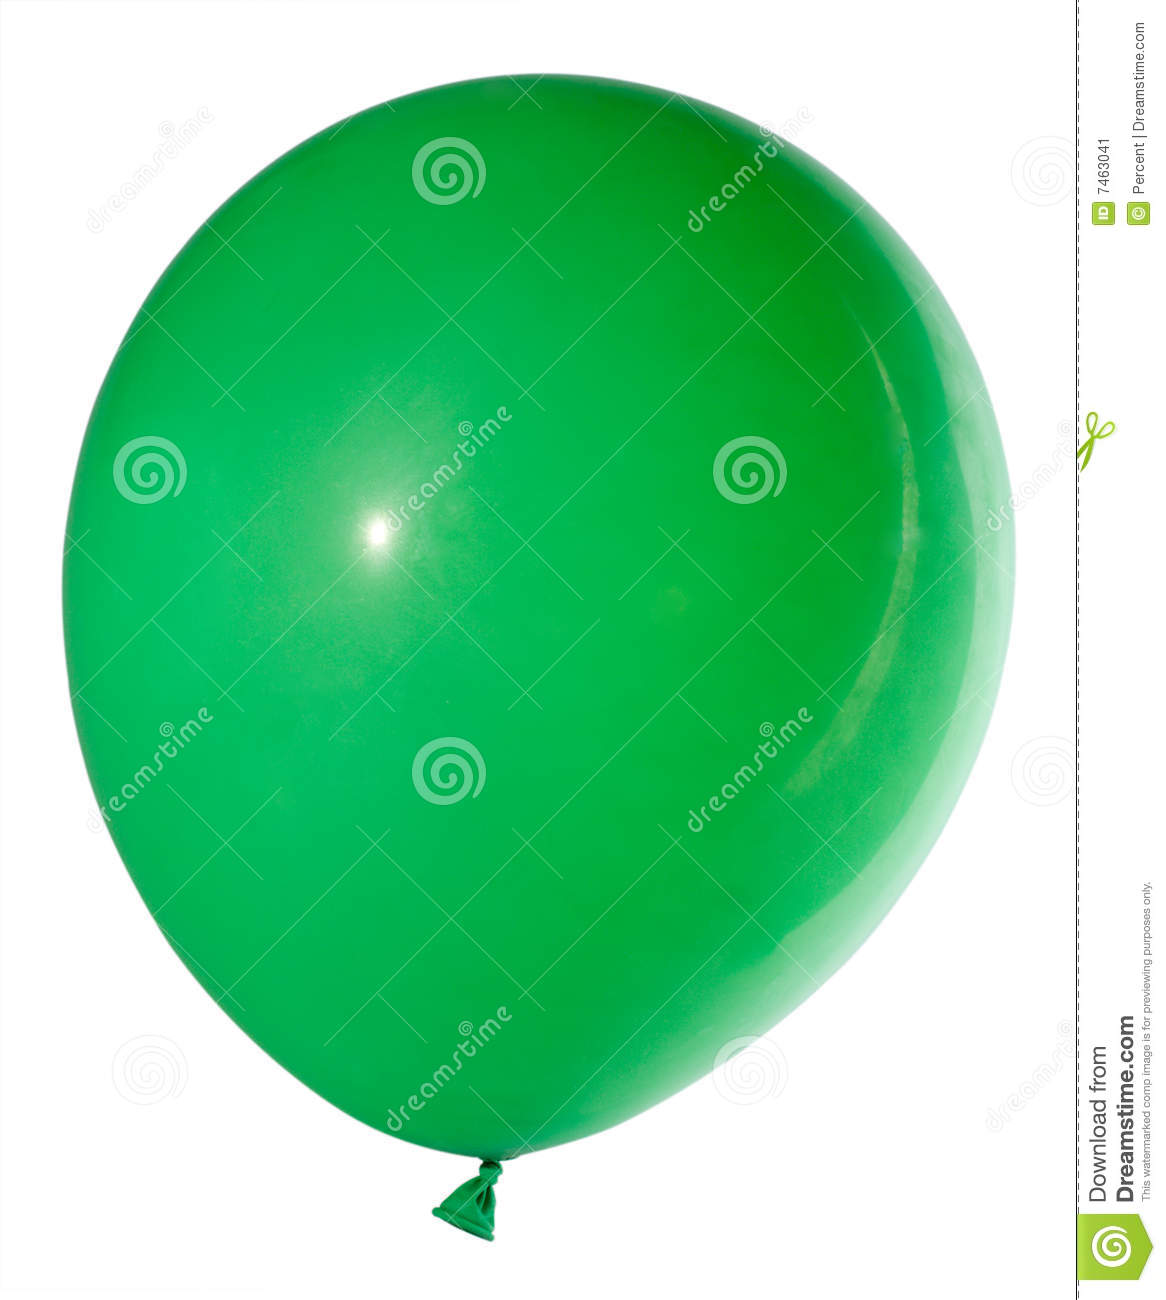 Swollen Green Balloon Stock Image   Image  7463041